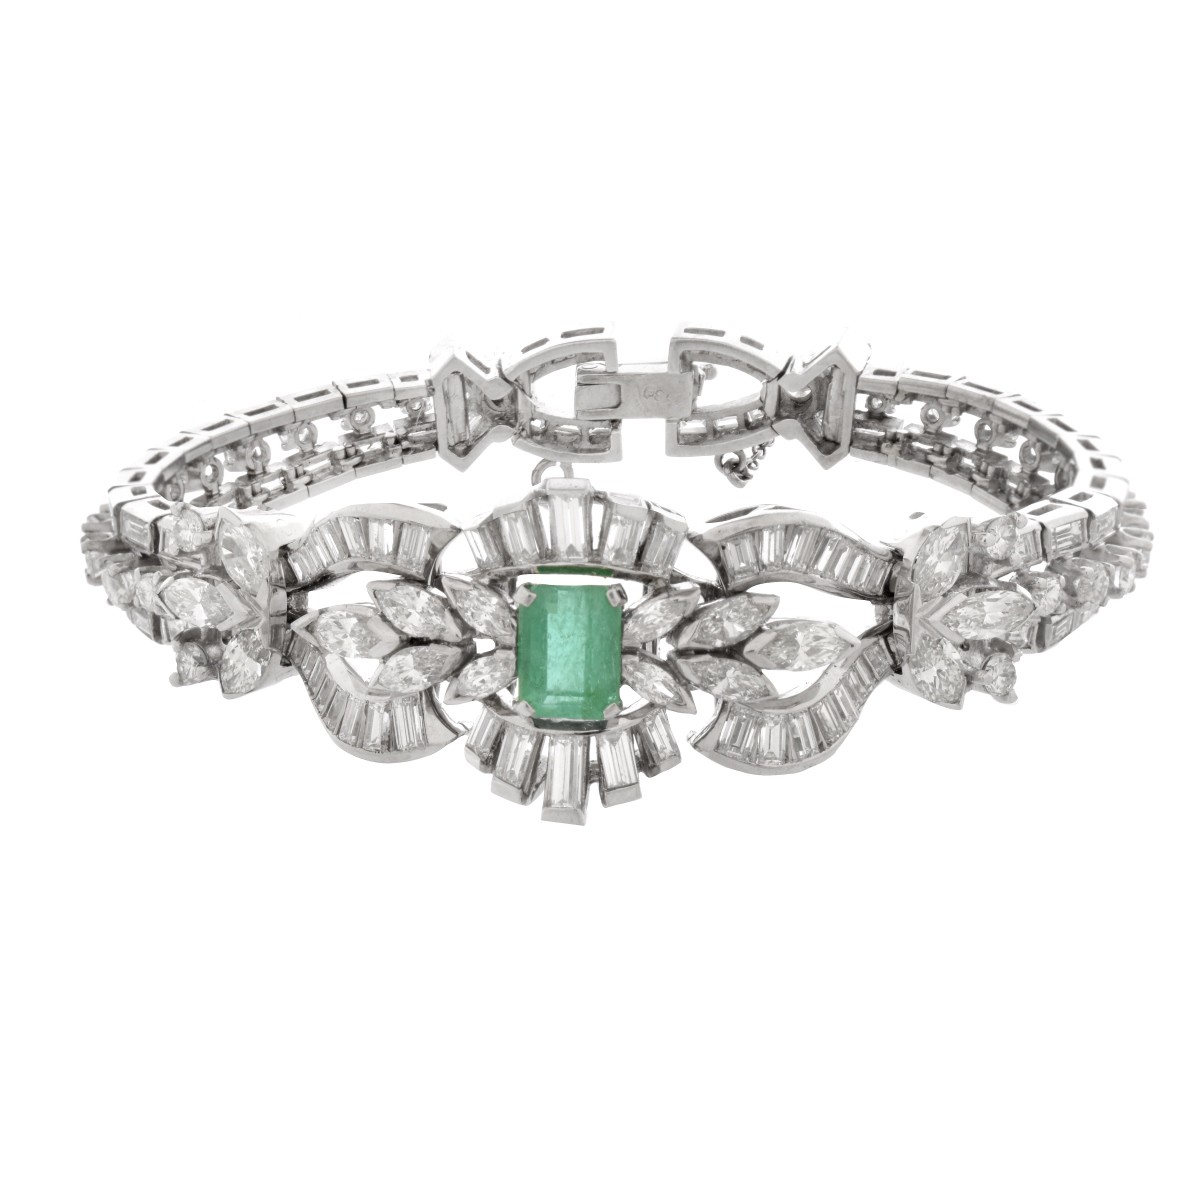 Diamond, Emerald and Platinum Bracelet